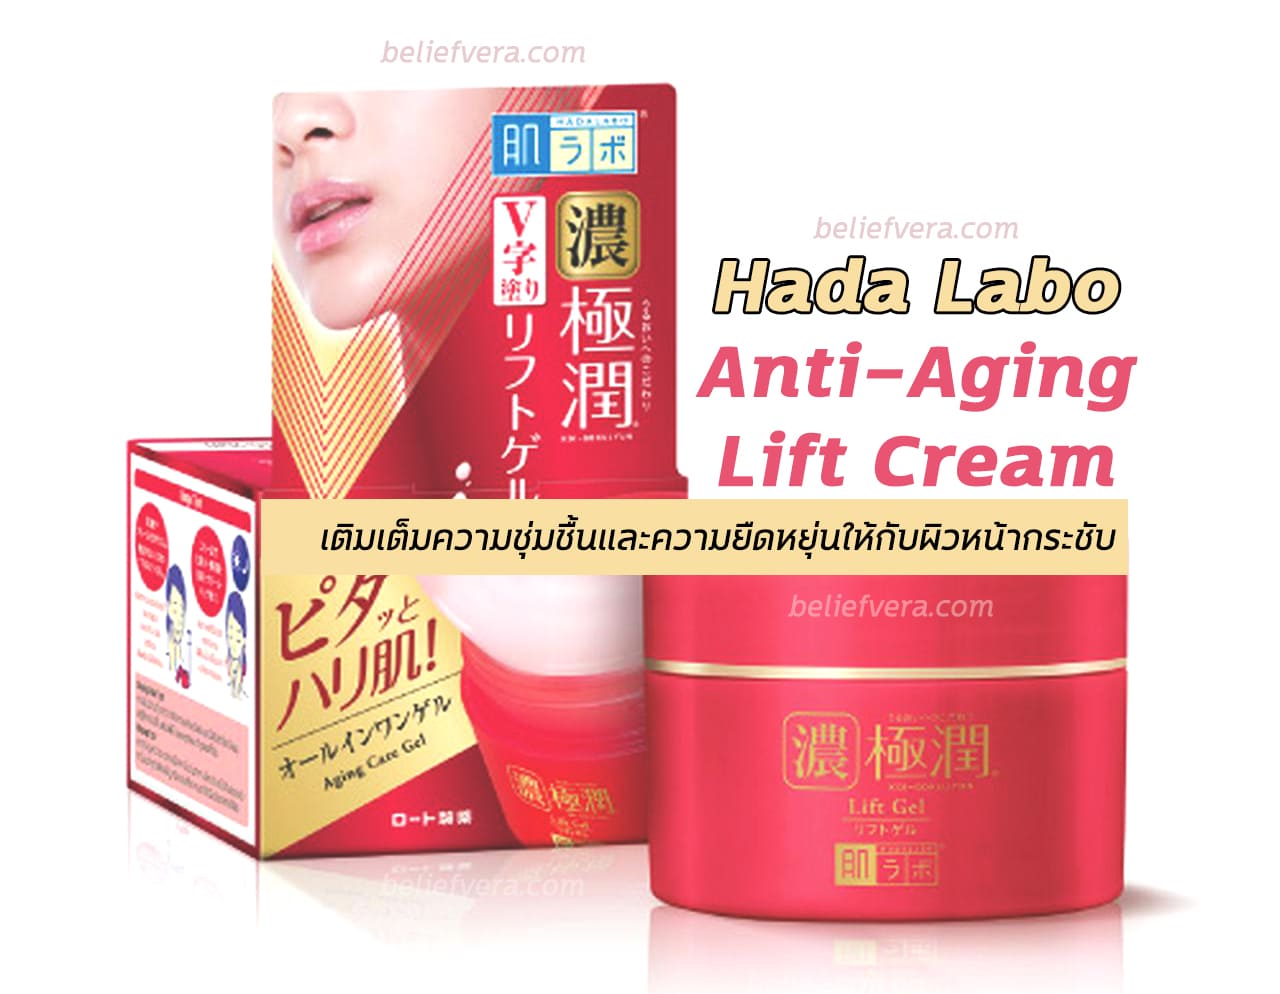 Hada Labo Anti-Aging Lift Cream